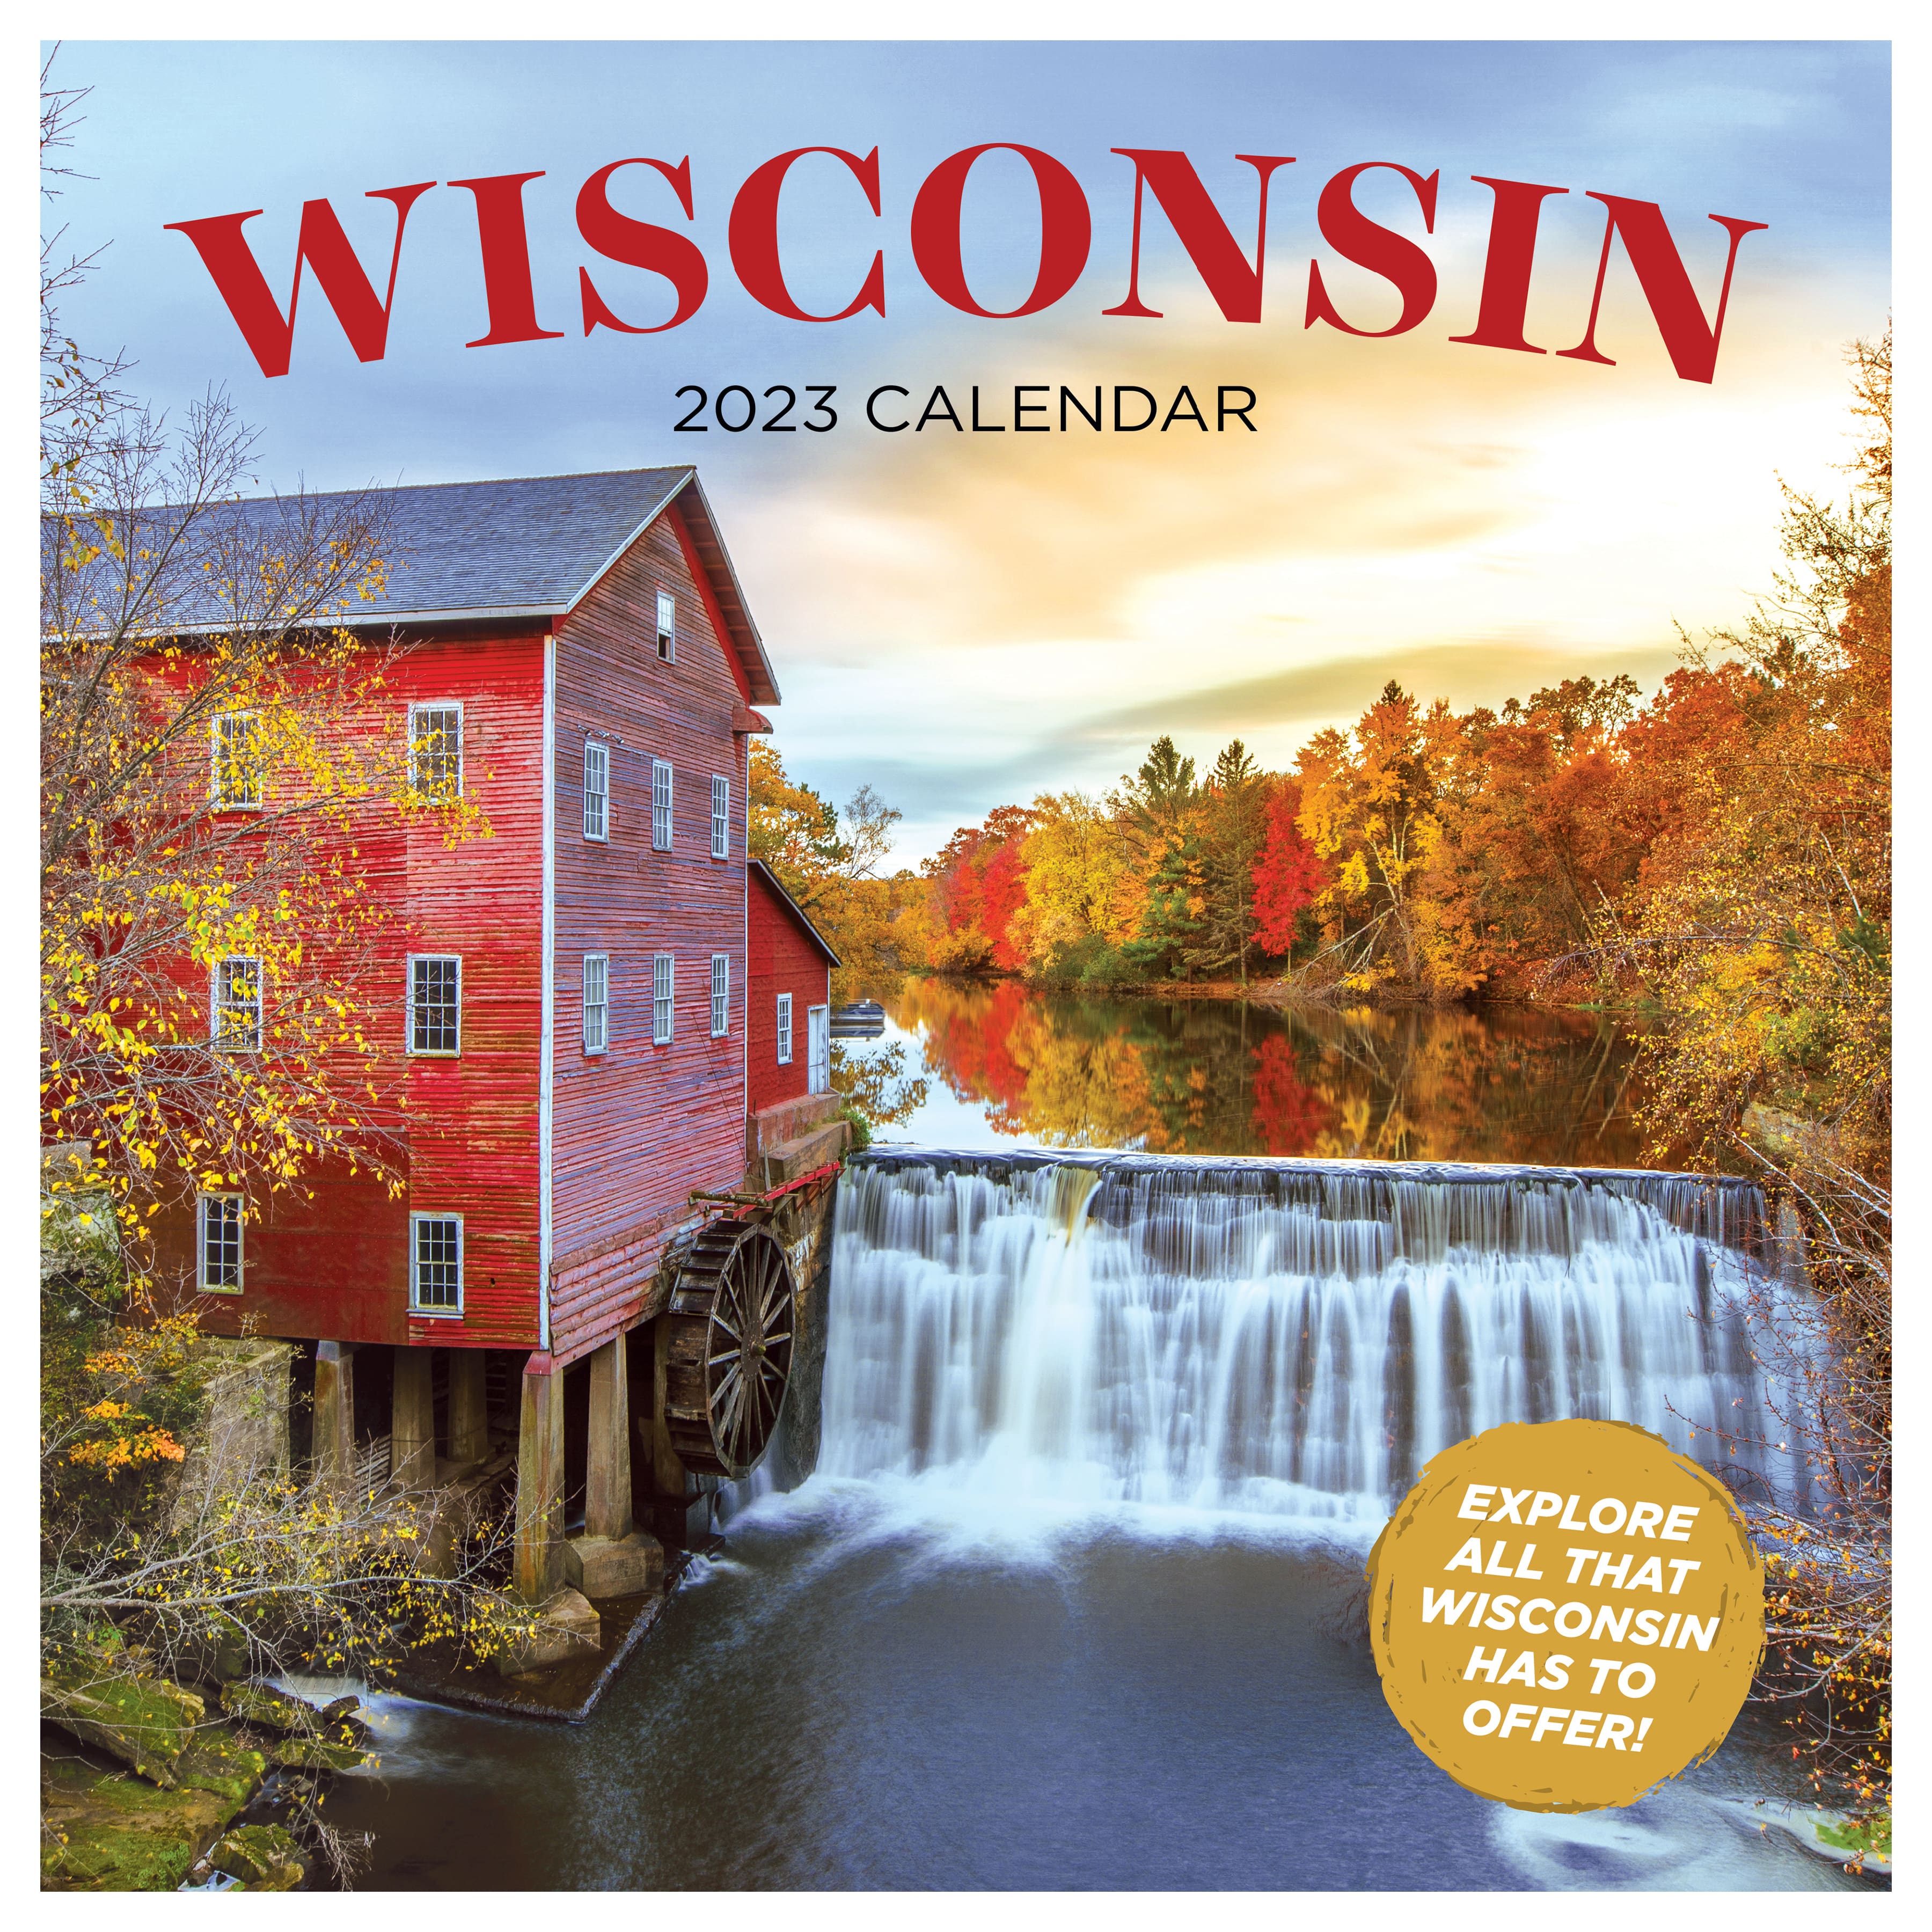 TF Publishing 2023 Wisconsin Wall Calendar Michaels